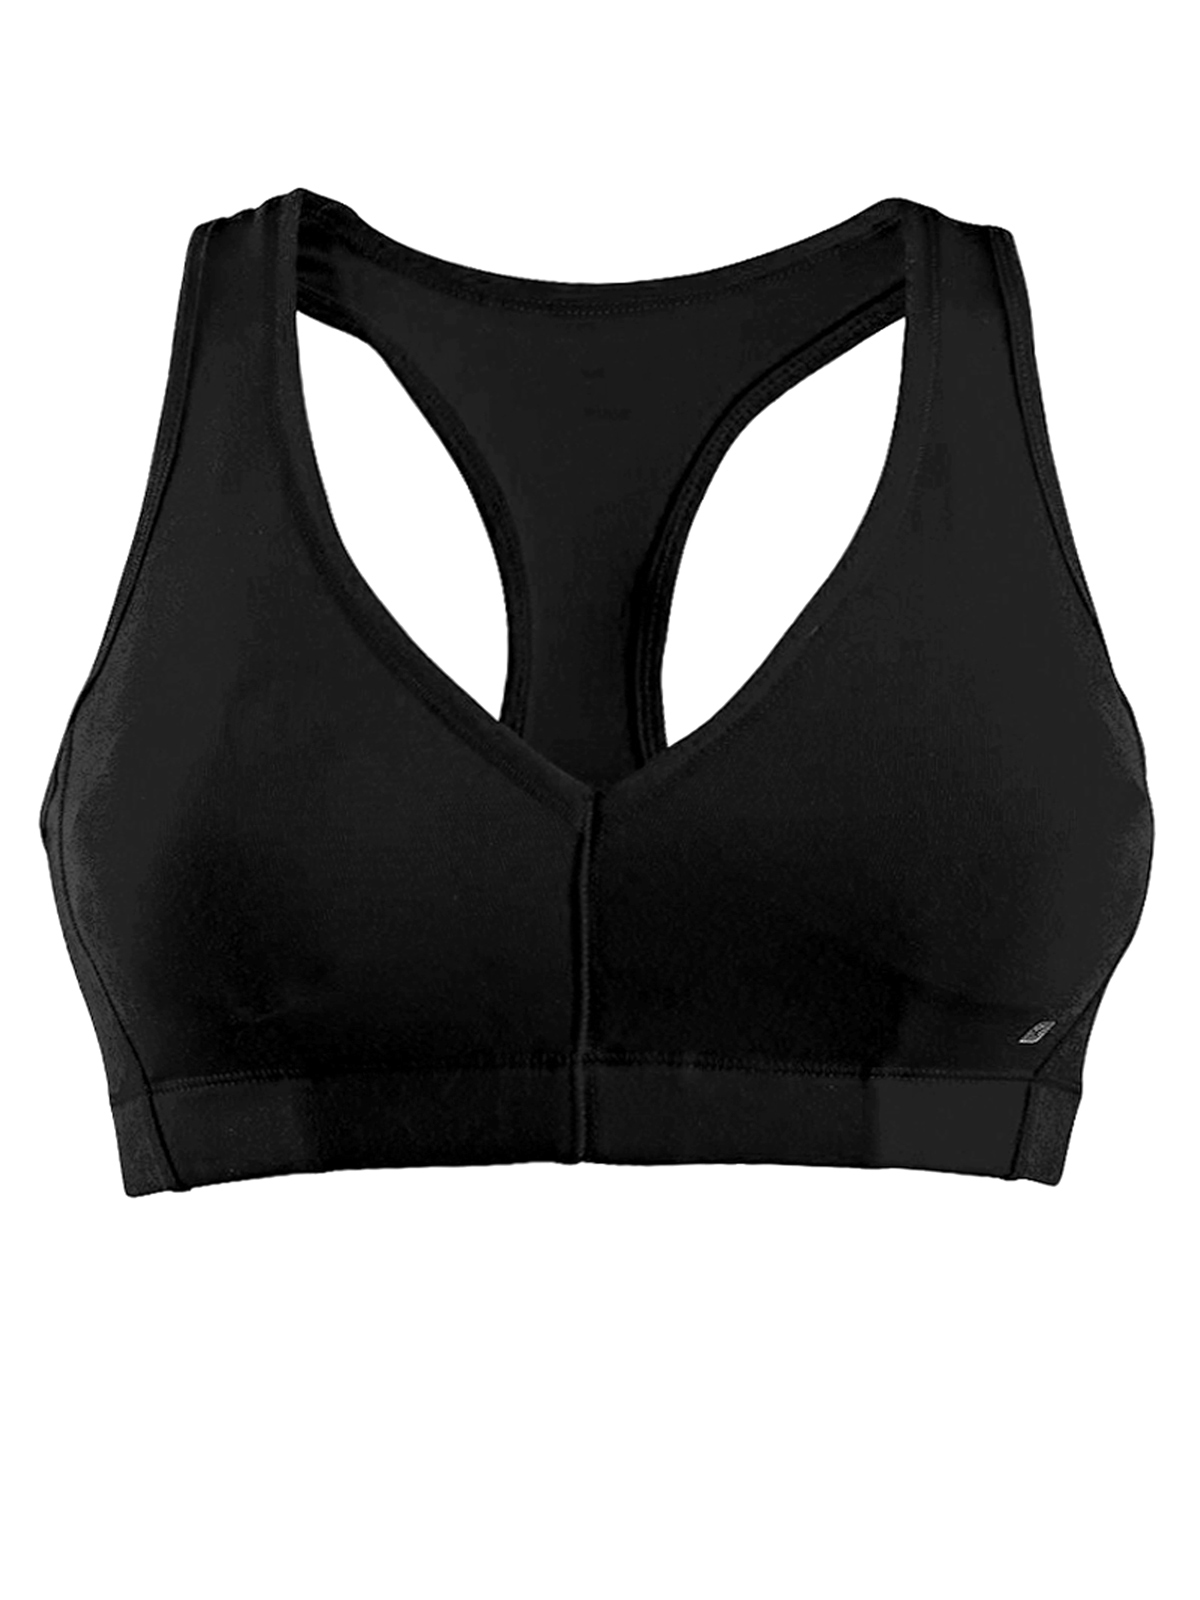 Wholesale De-Branded Domyos by Decathlon - - BLACK Supportiv Dynamic  Fitness Sports Bra Top - Size 16 (EU 42)